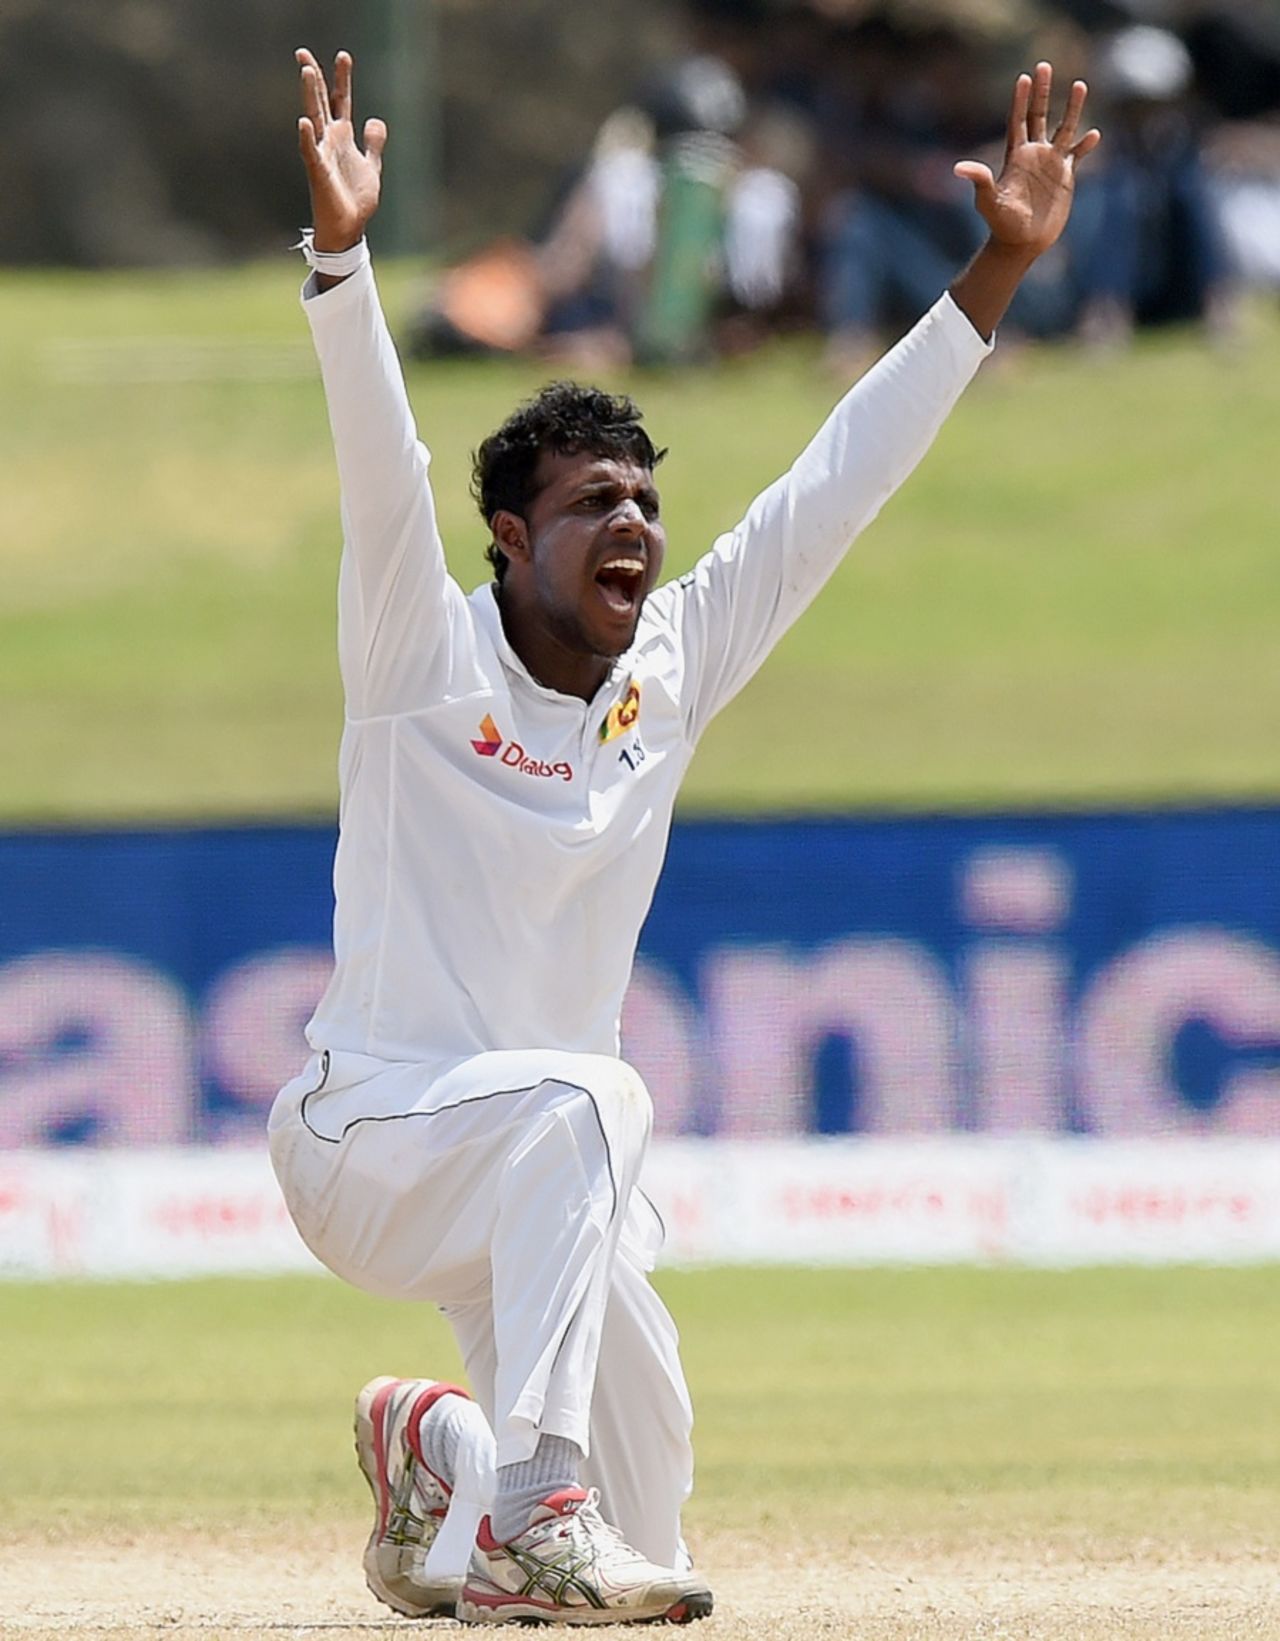 Tharindu Kaushal appeals successfully for an lbw against Virat Kohli, Sri Lanka v India, 1st Test, Galle, 2nd day, August 13, 2015